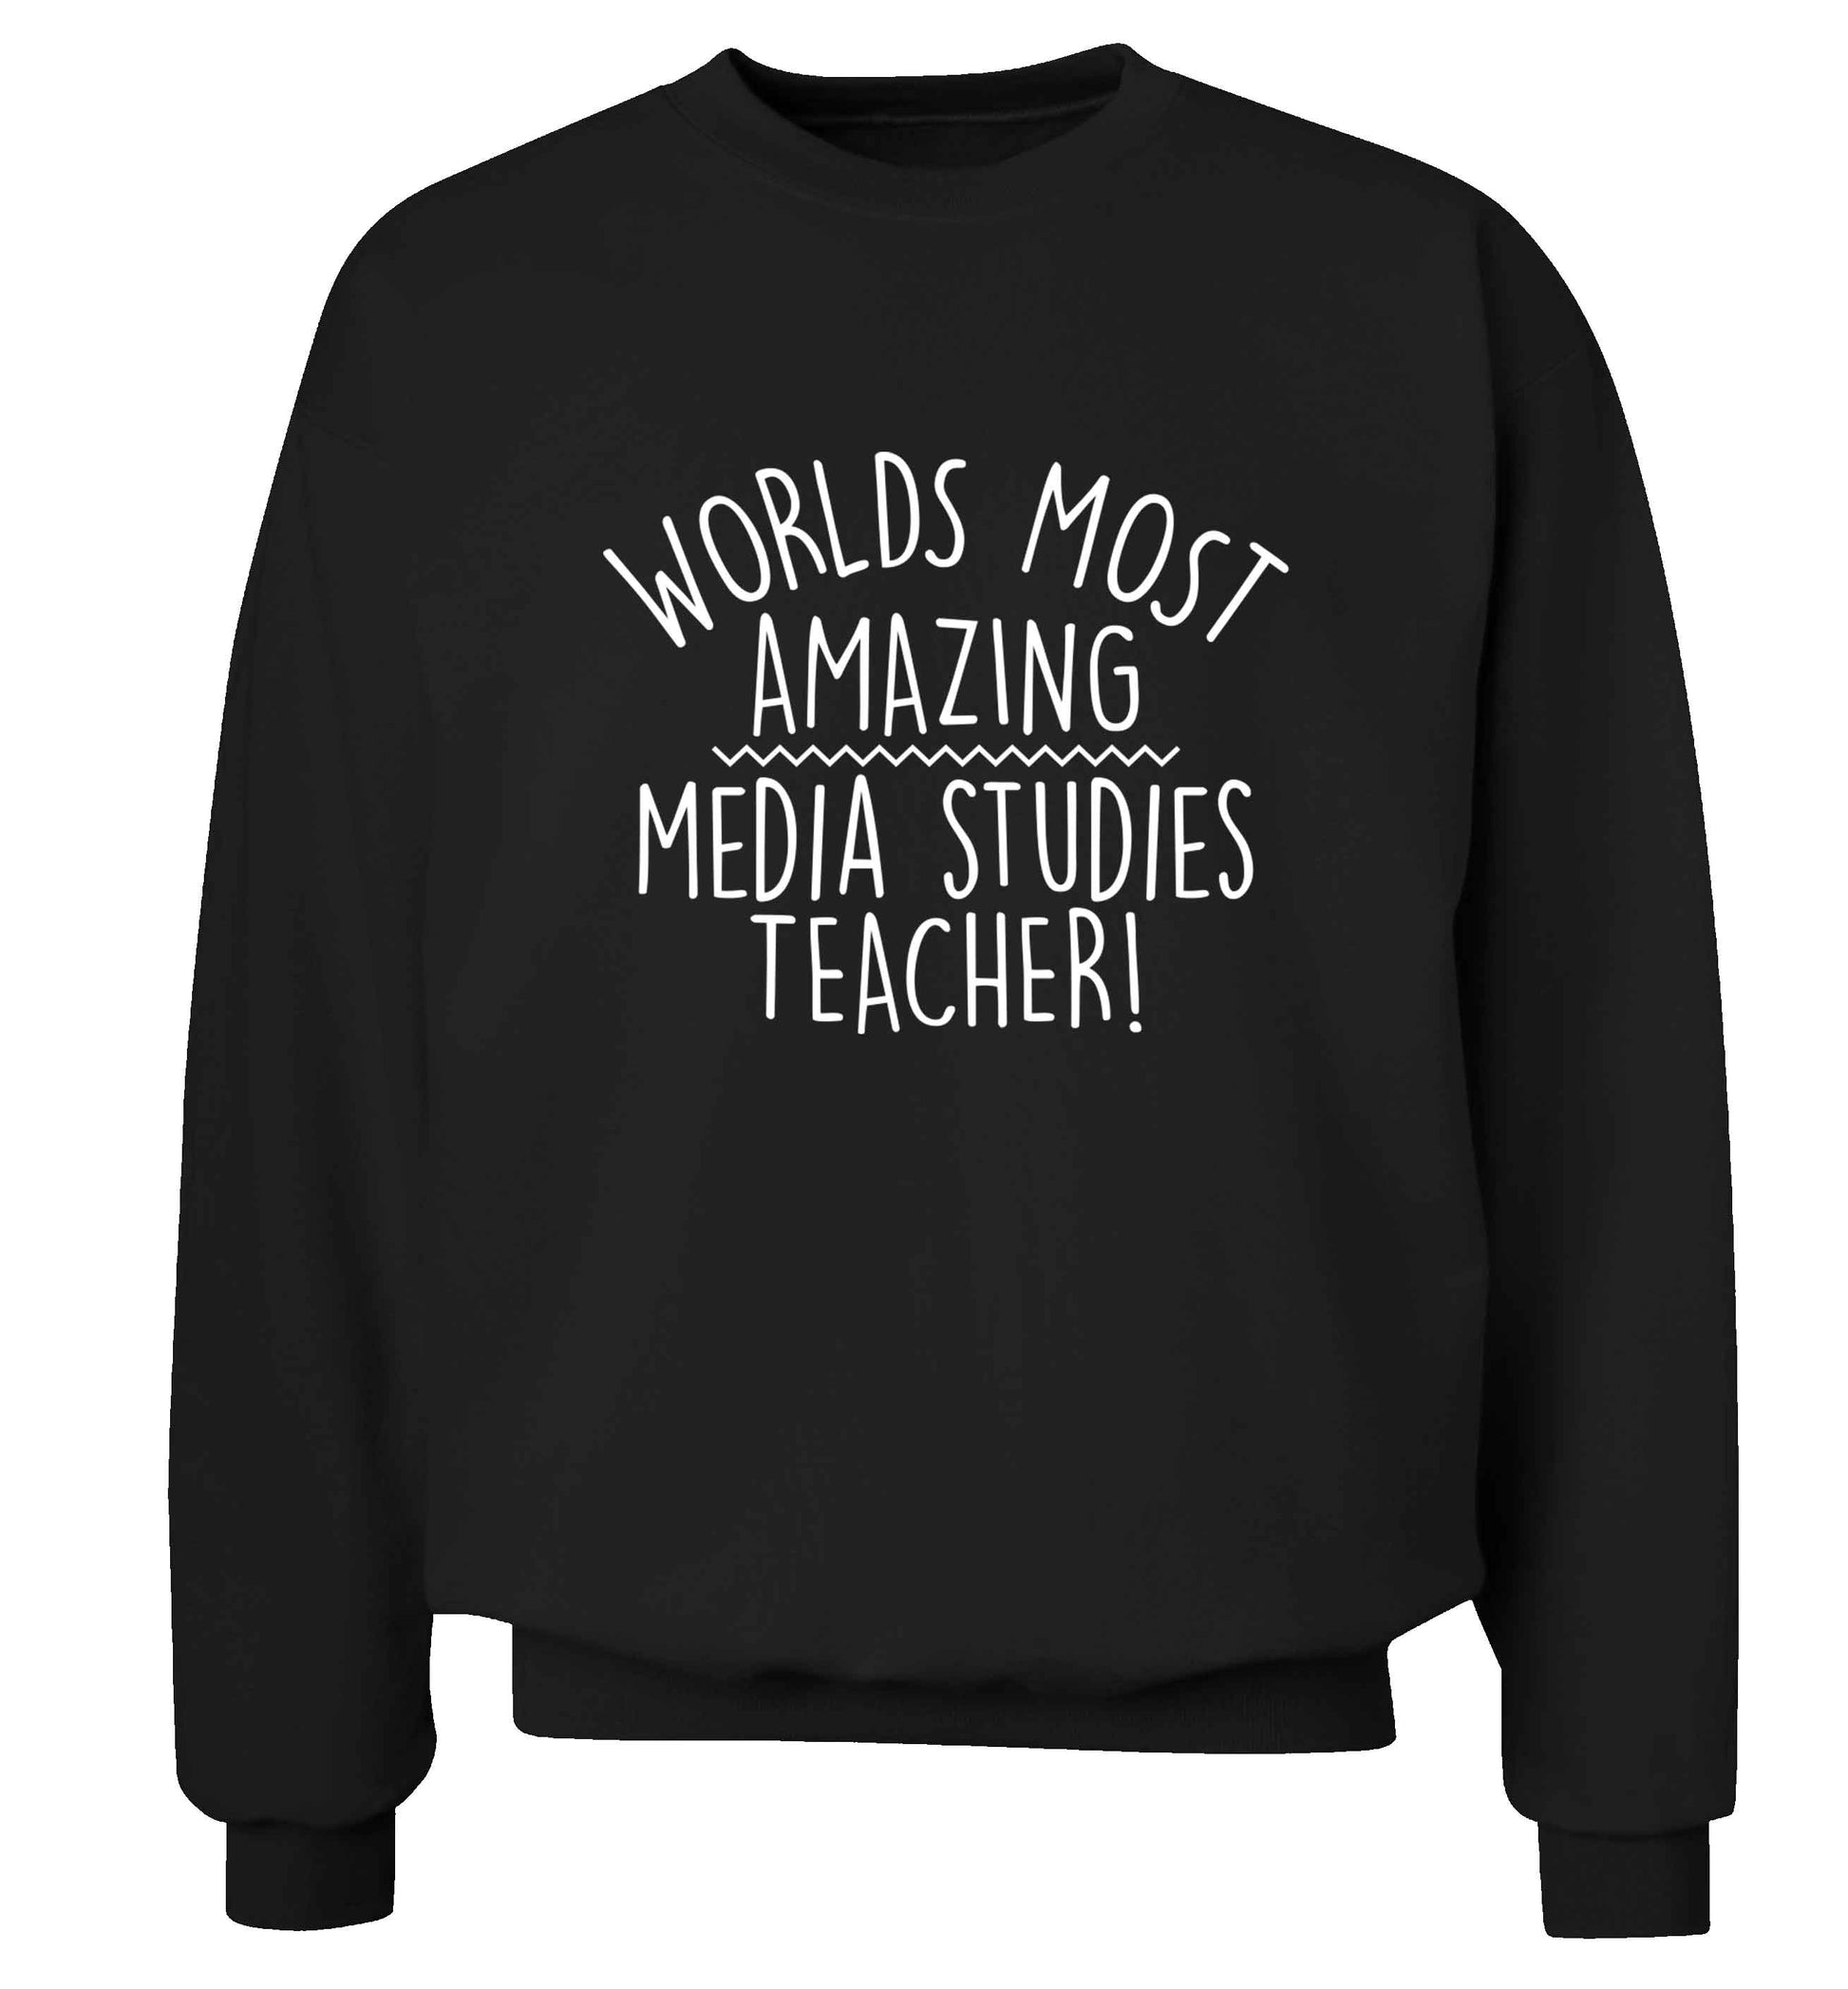 Worlds most amazing media studies teacher adult's unisex black sweater 2XL